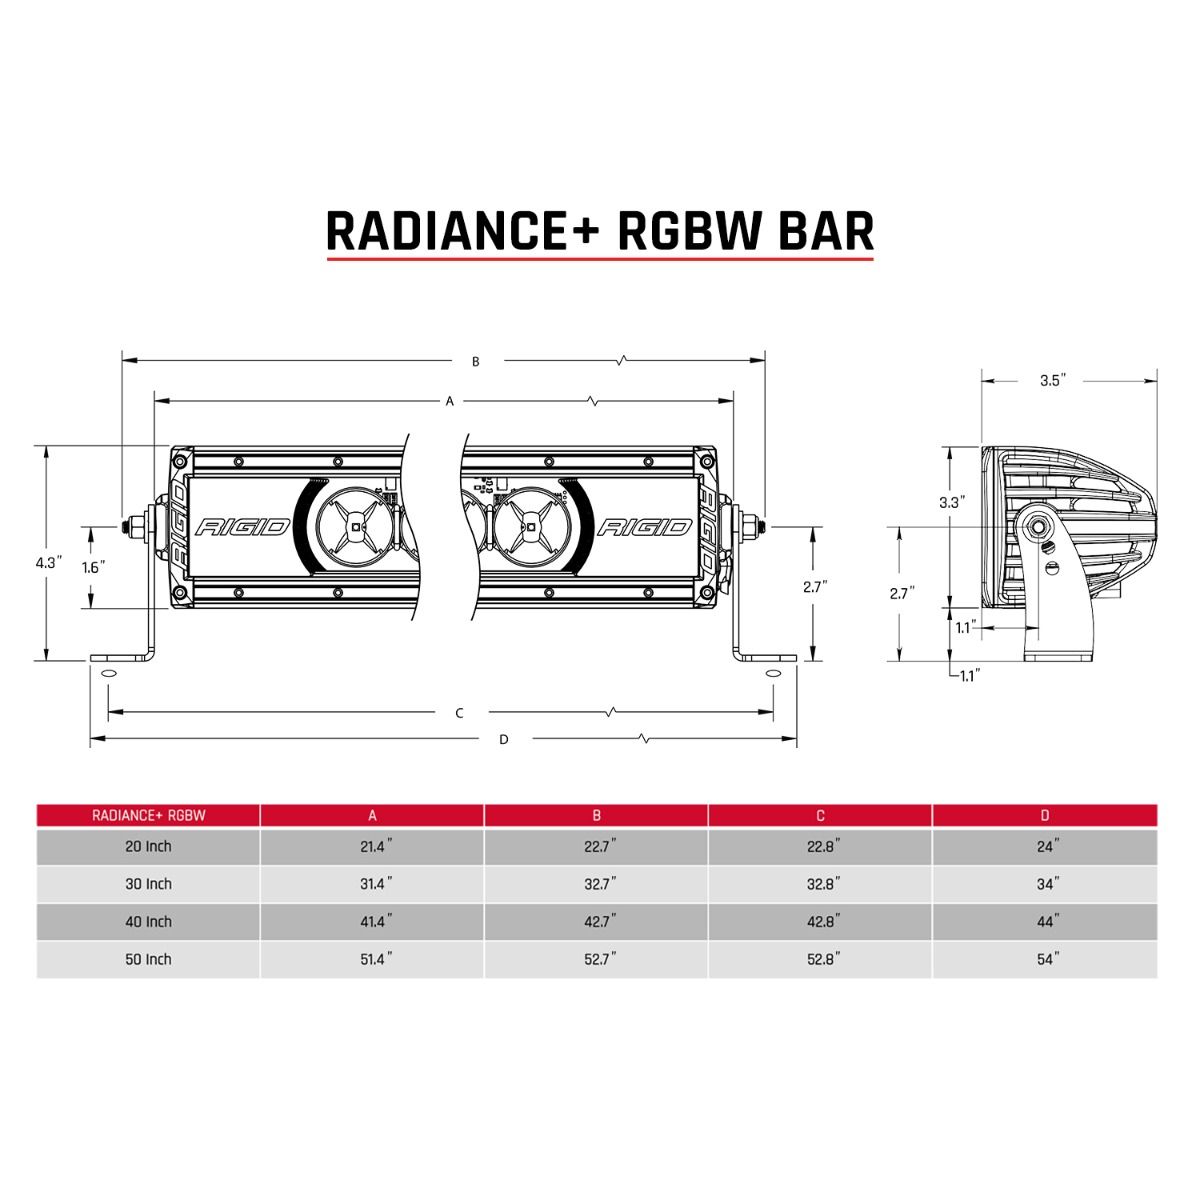 Rigid Radiance 40" RGBW Light Bar